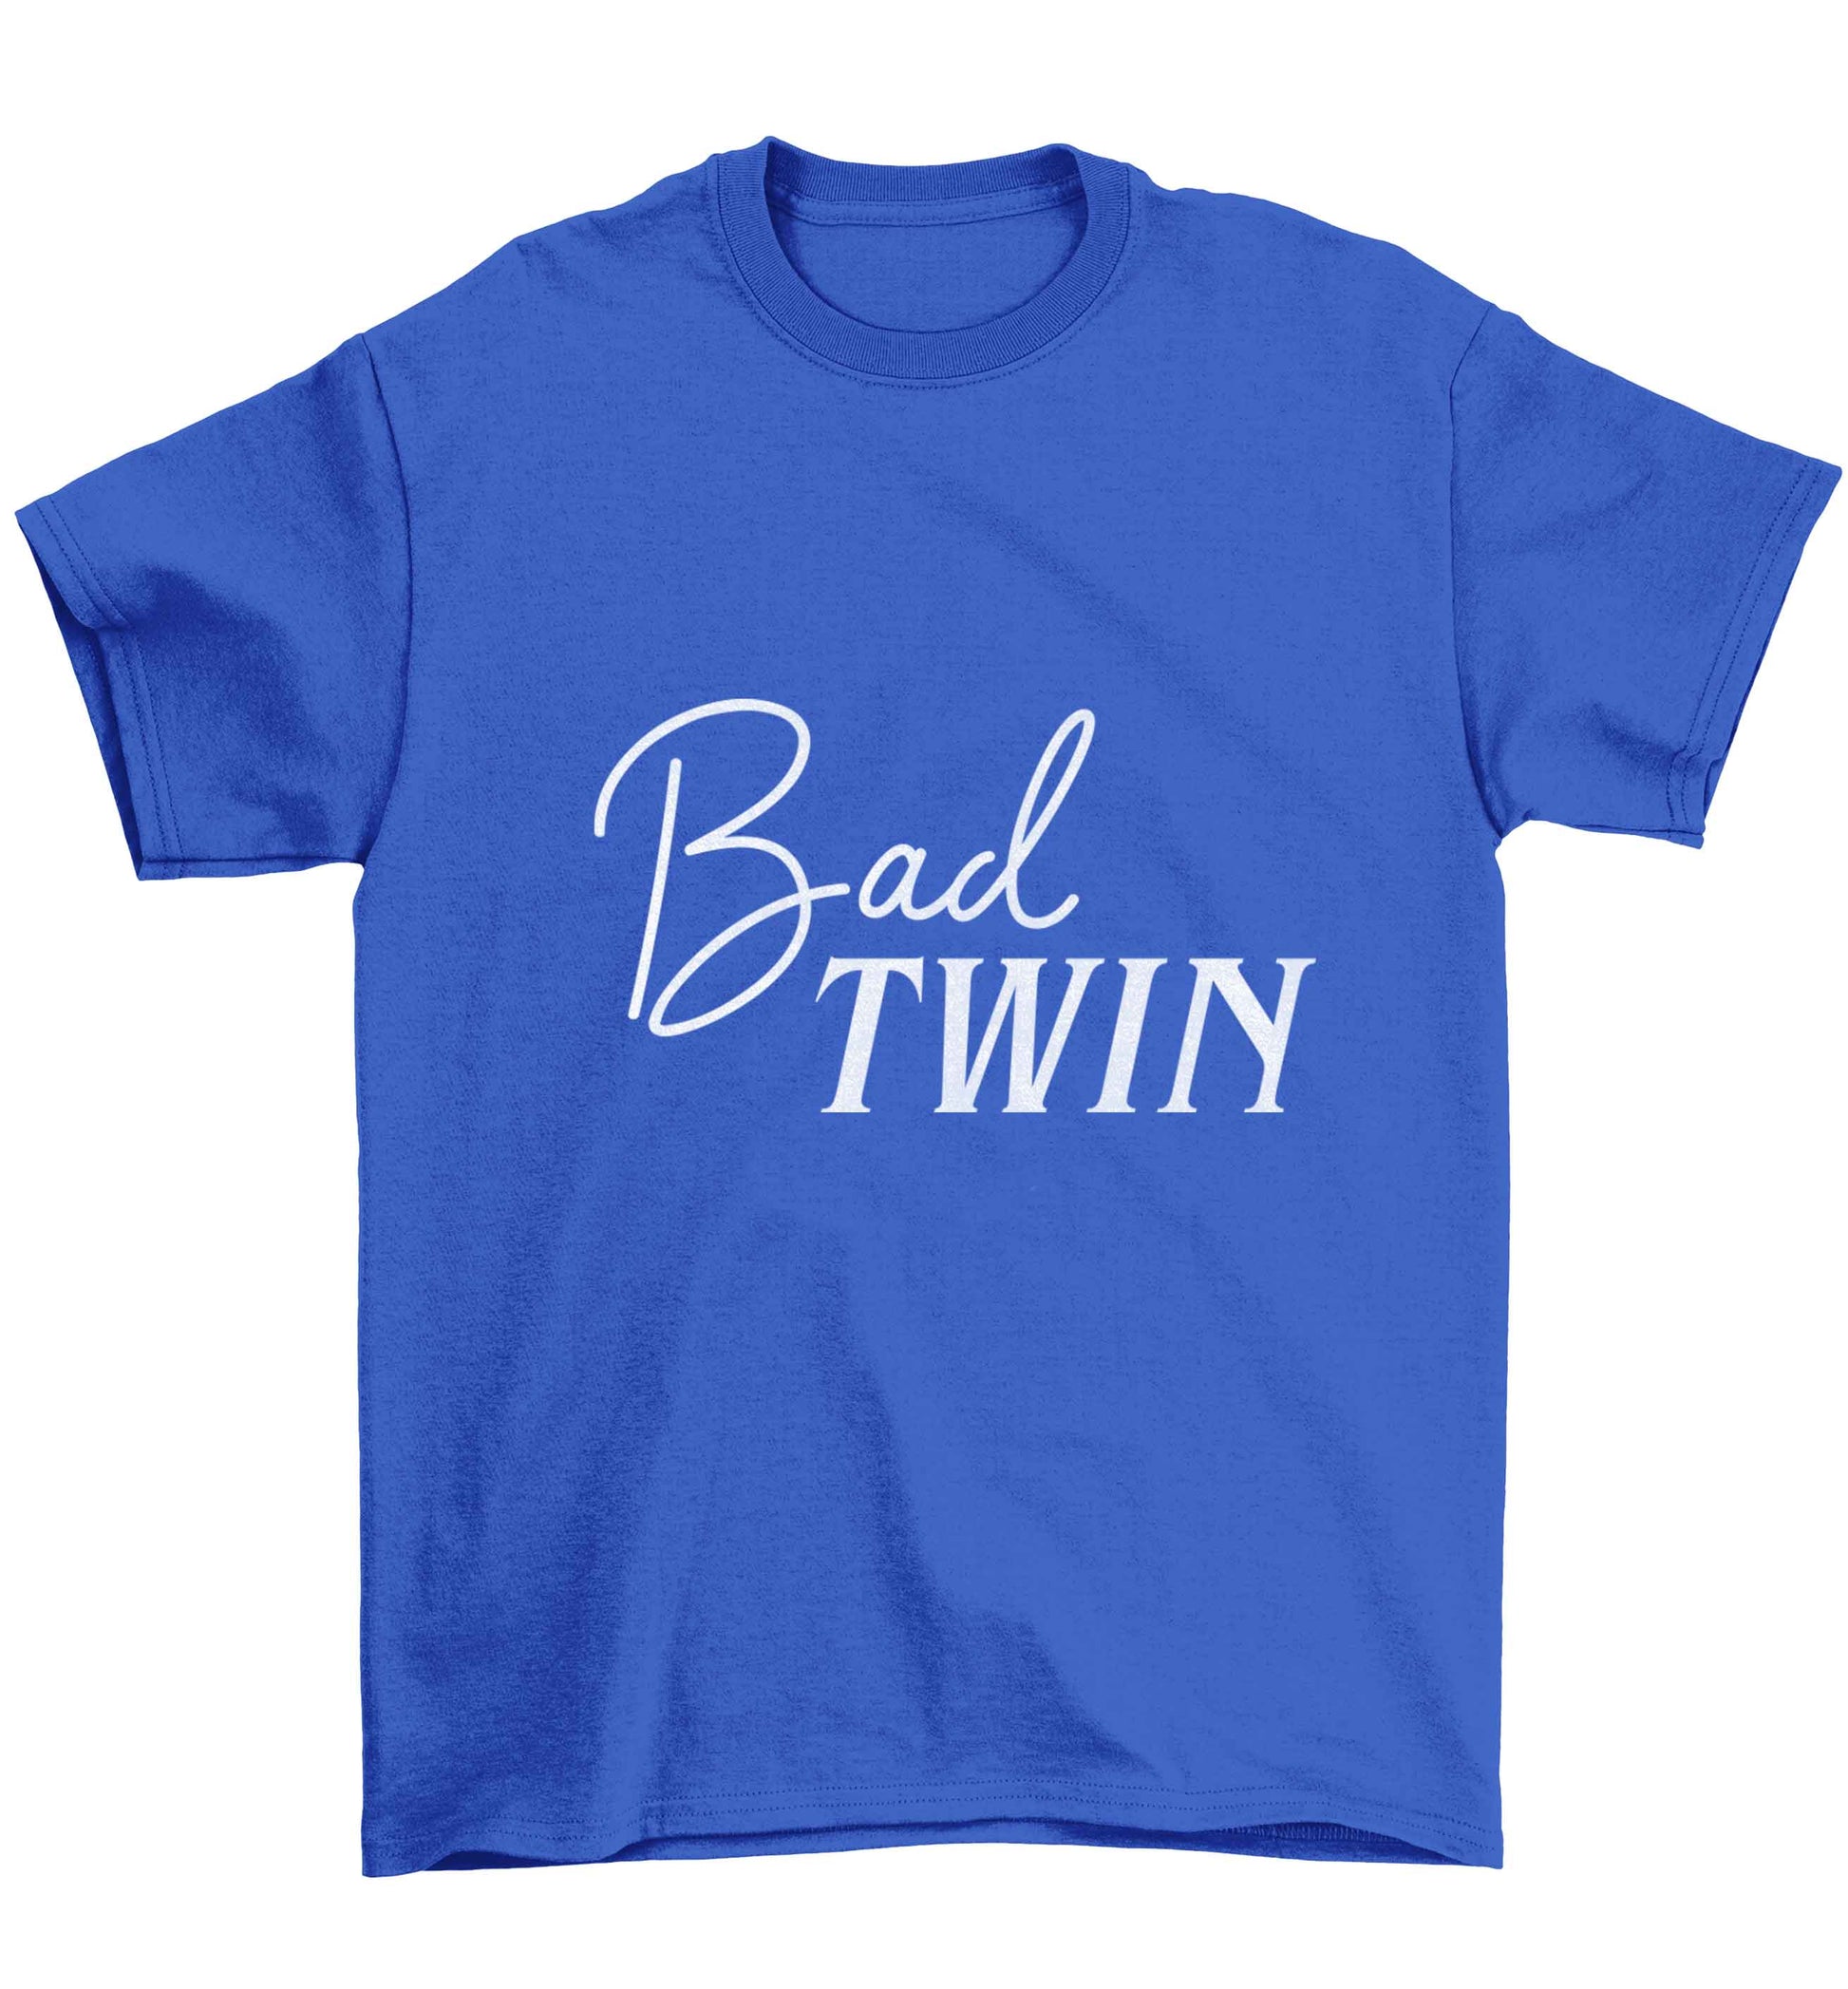 Bad twin Children's blue Tshirt 12-13 Years